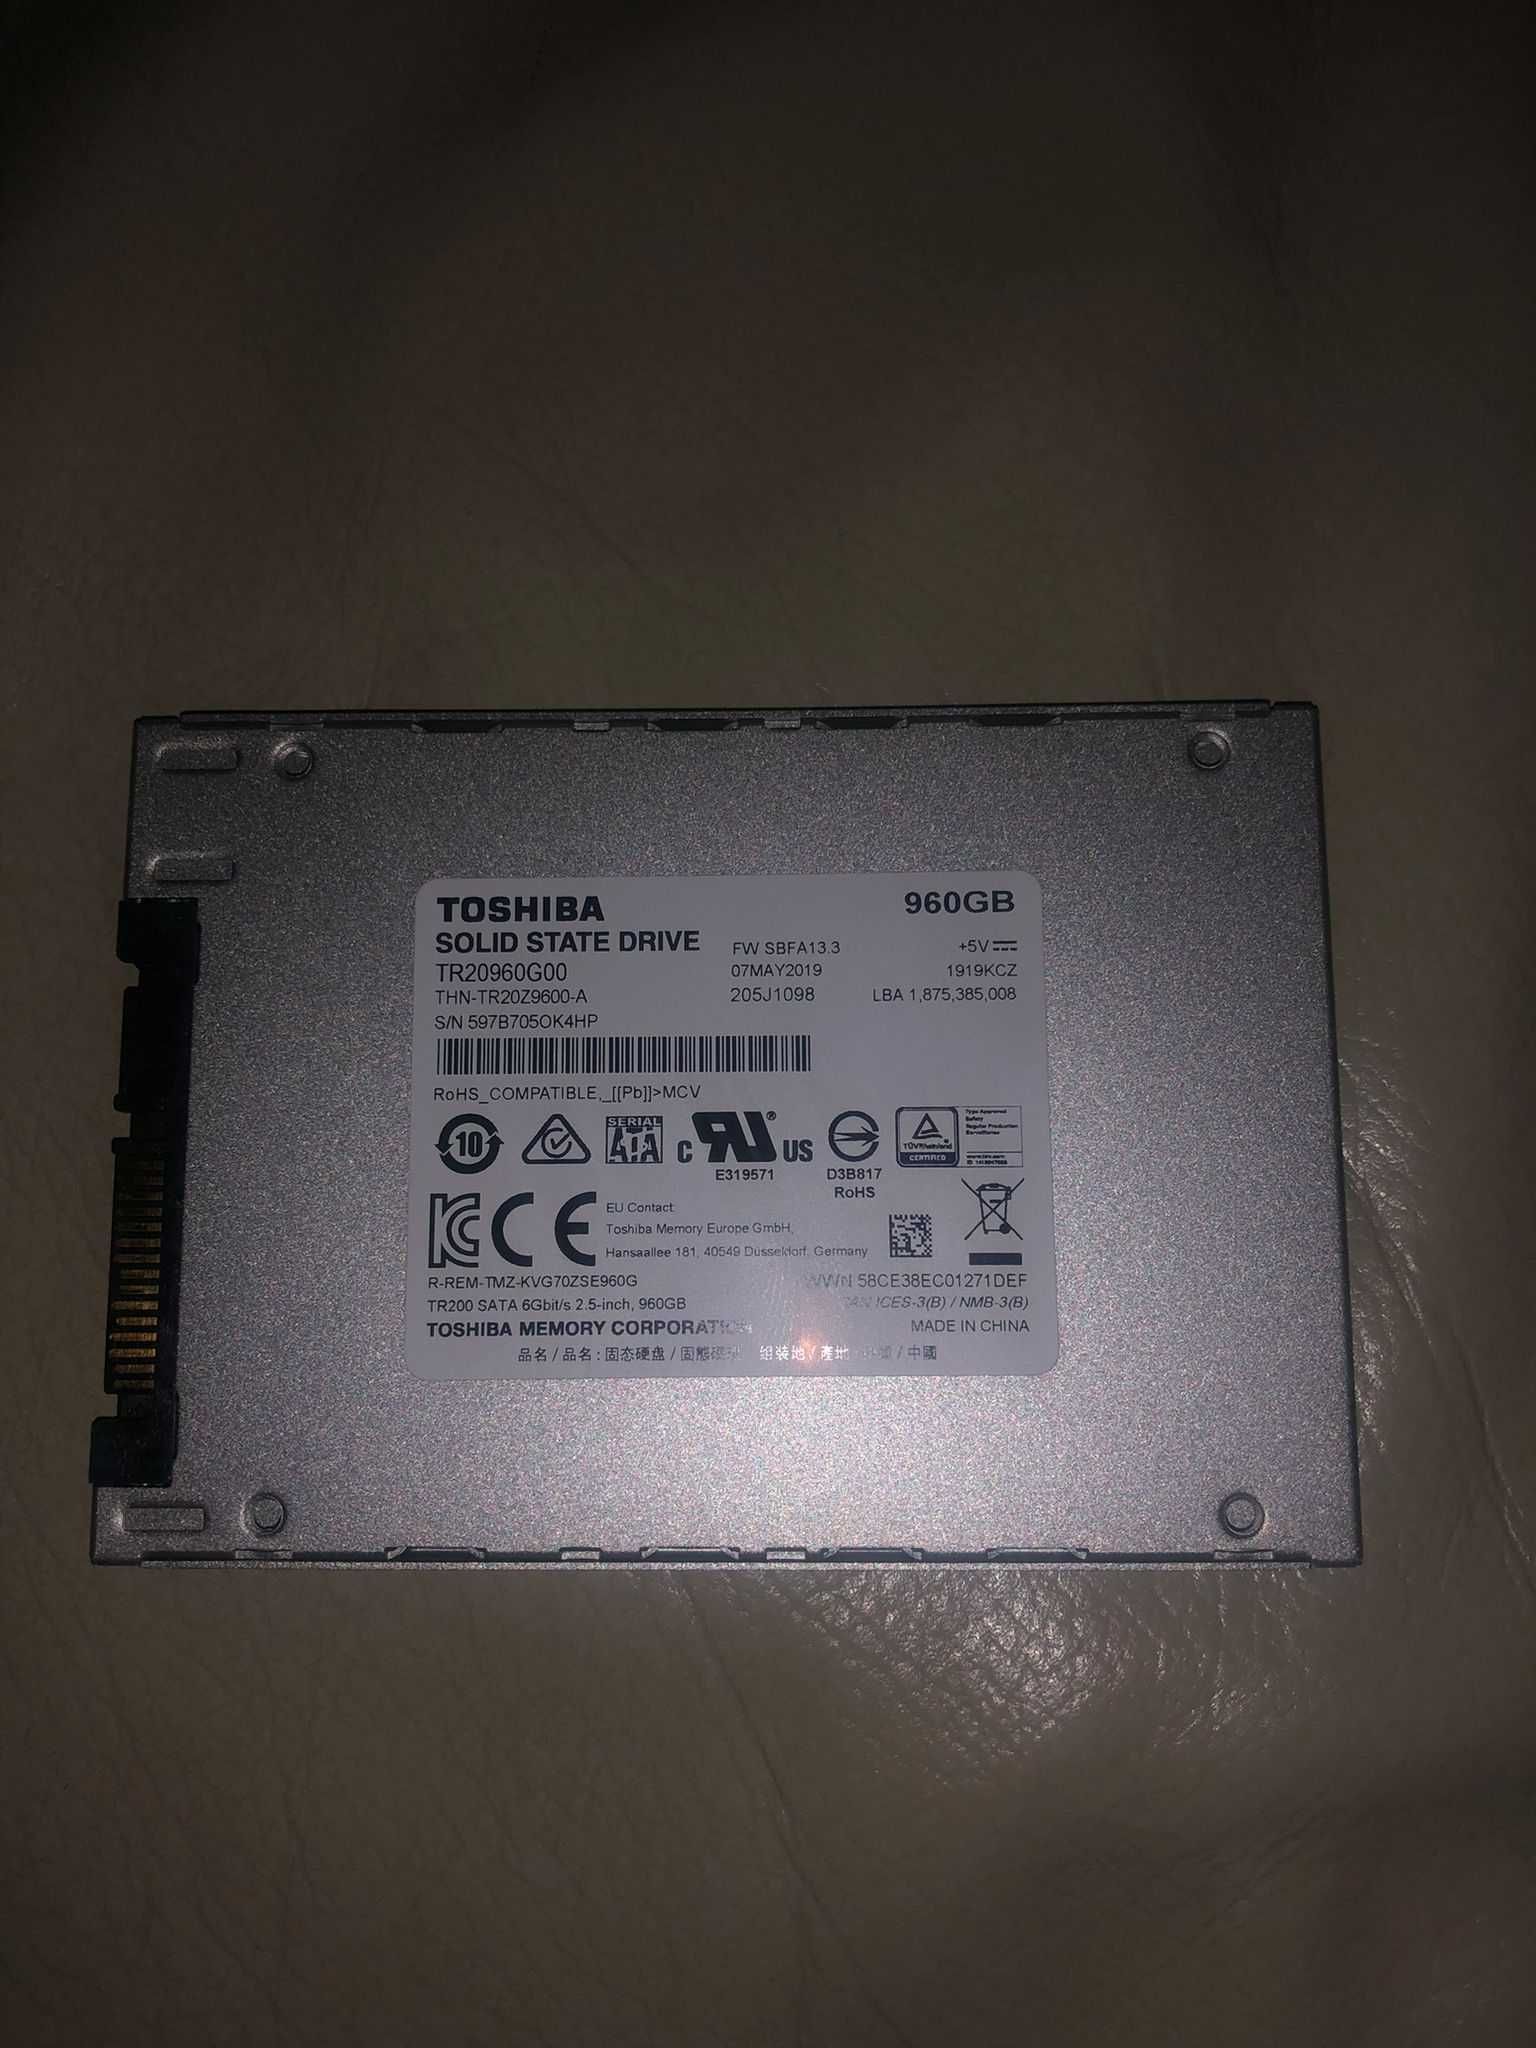 DISCO SSD Toshiba TR200 1T gb  2.5''